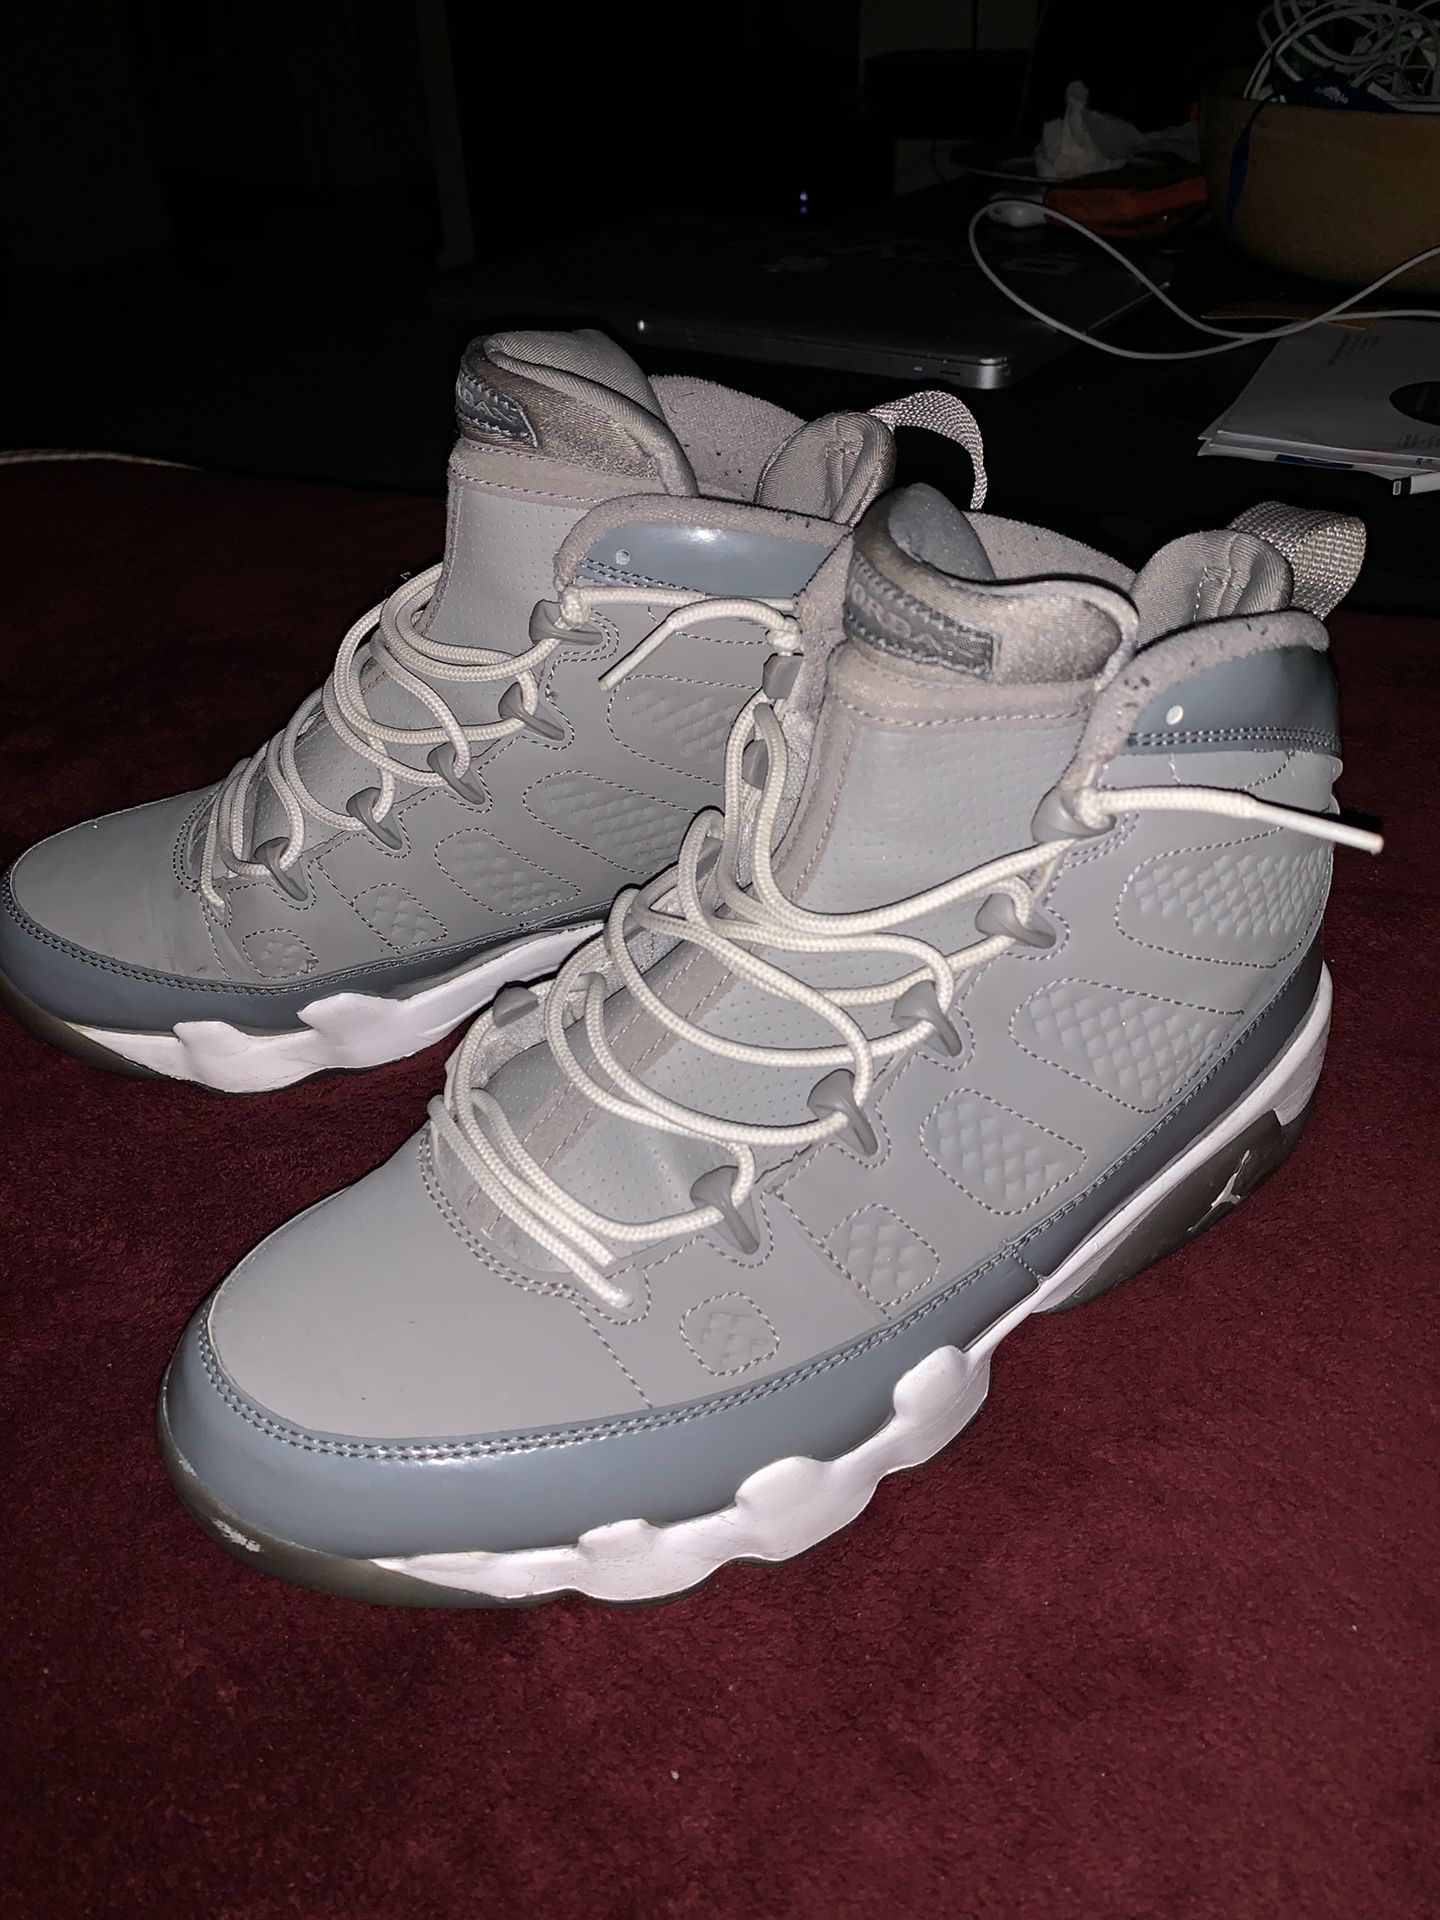 Air Jordan Cool Grey 9s Size 8.5